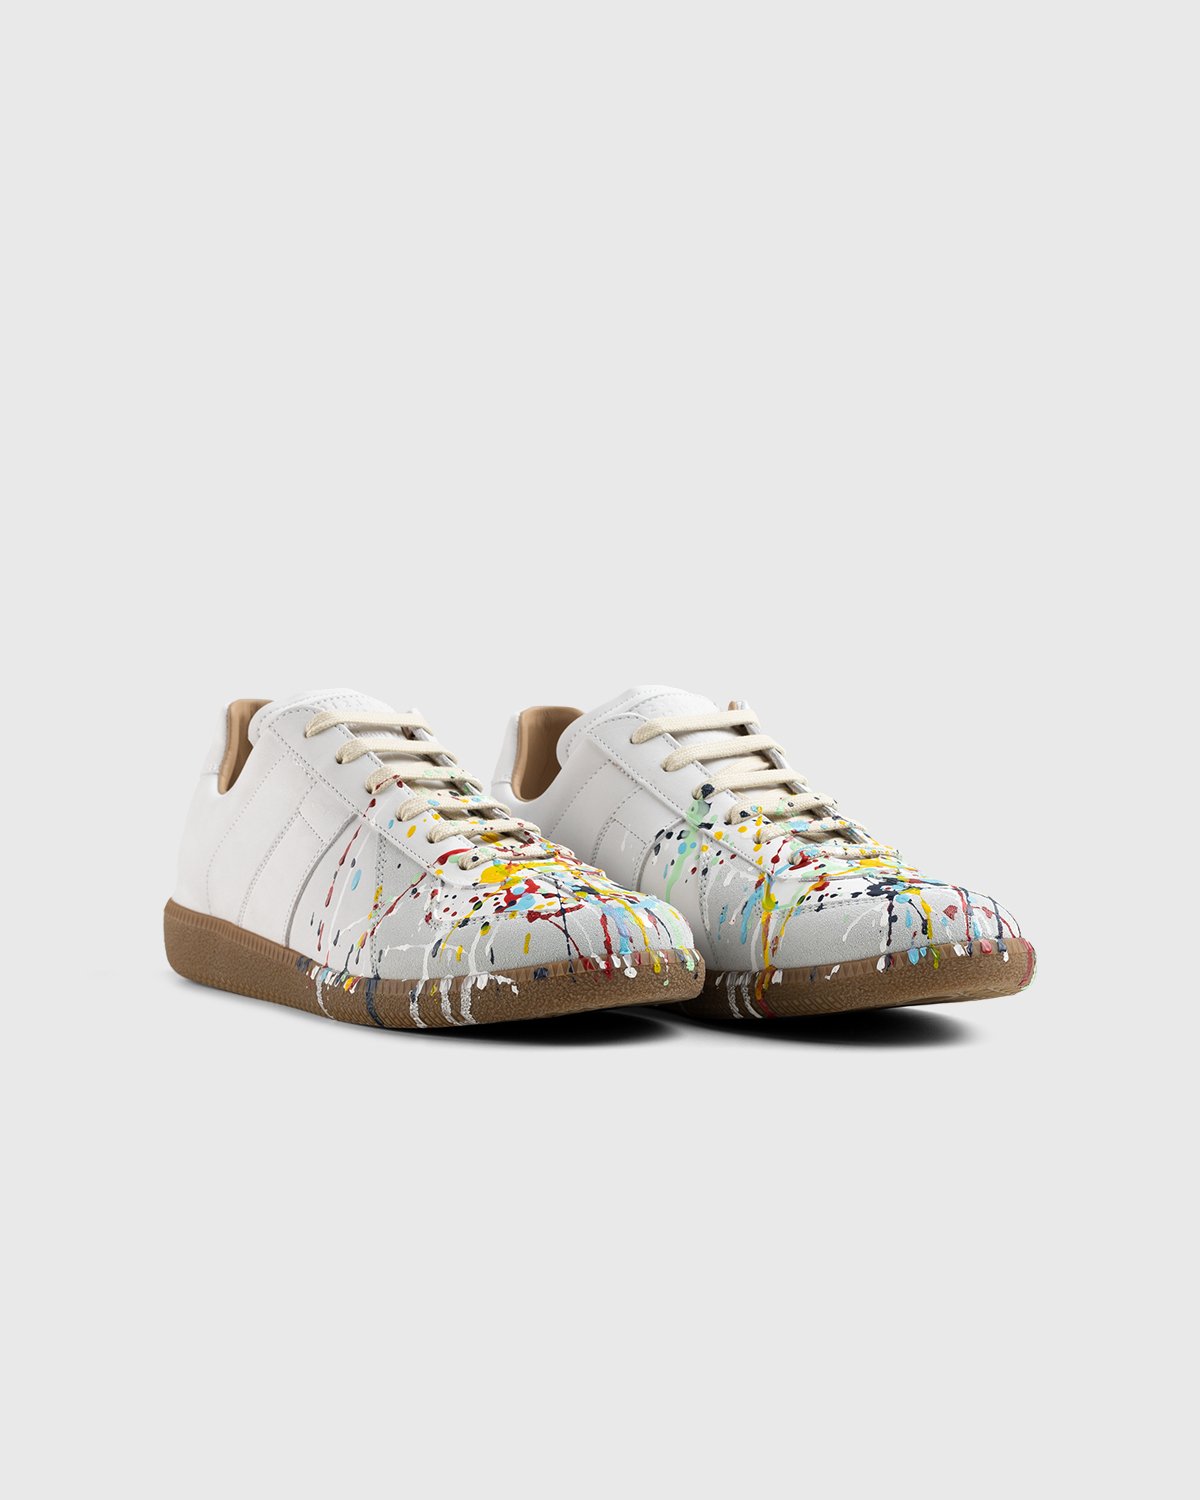 Maison Margiela - Replica Paint Drop Sneakers White - Footwear - White - Image 2